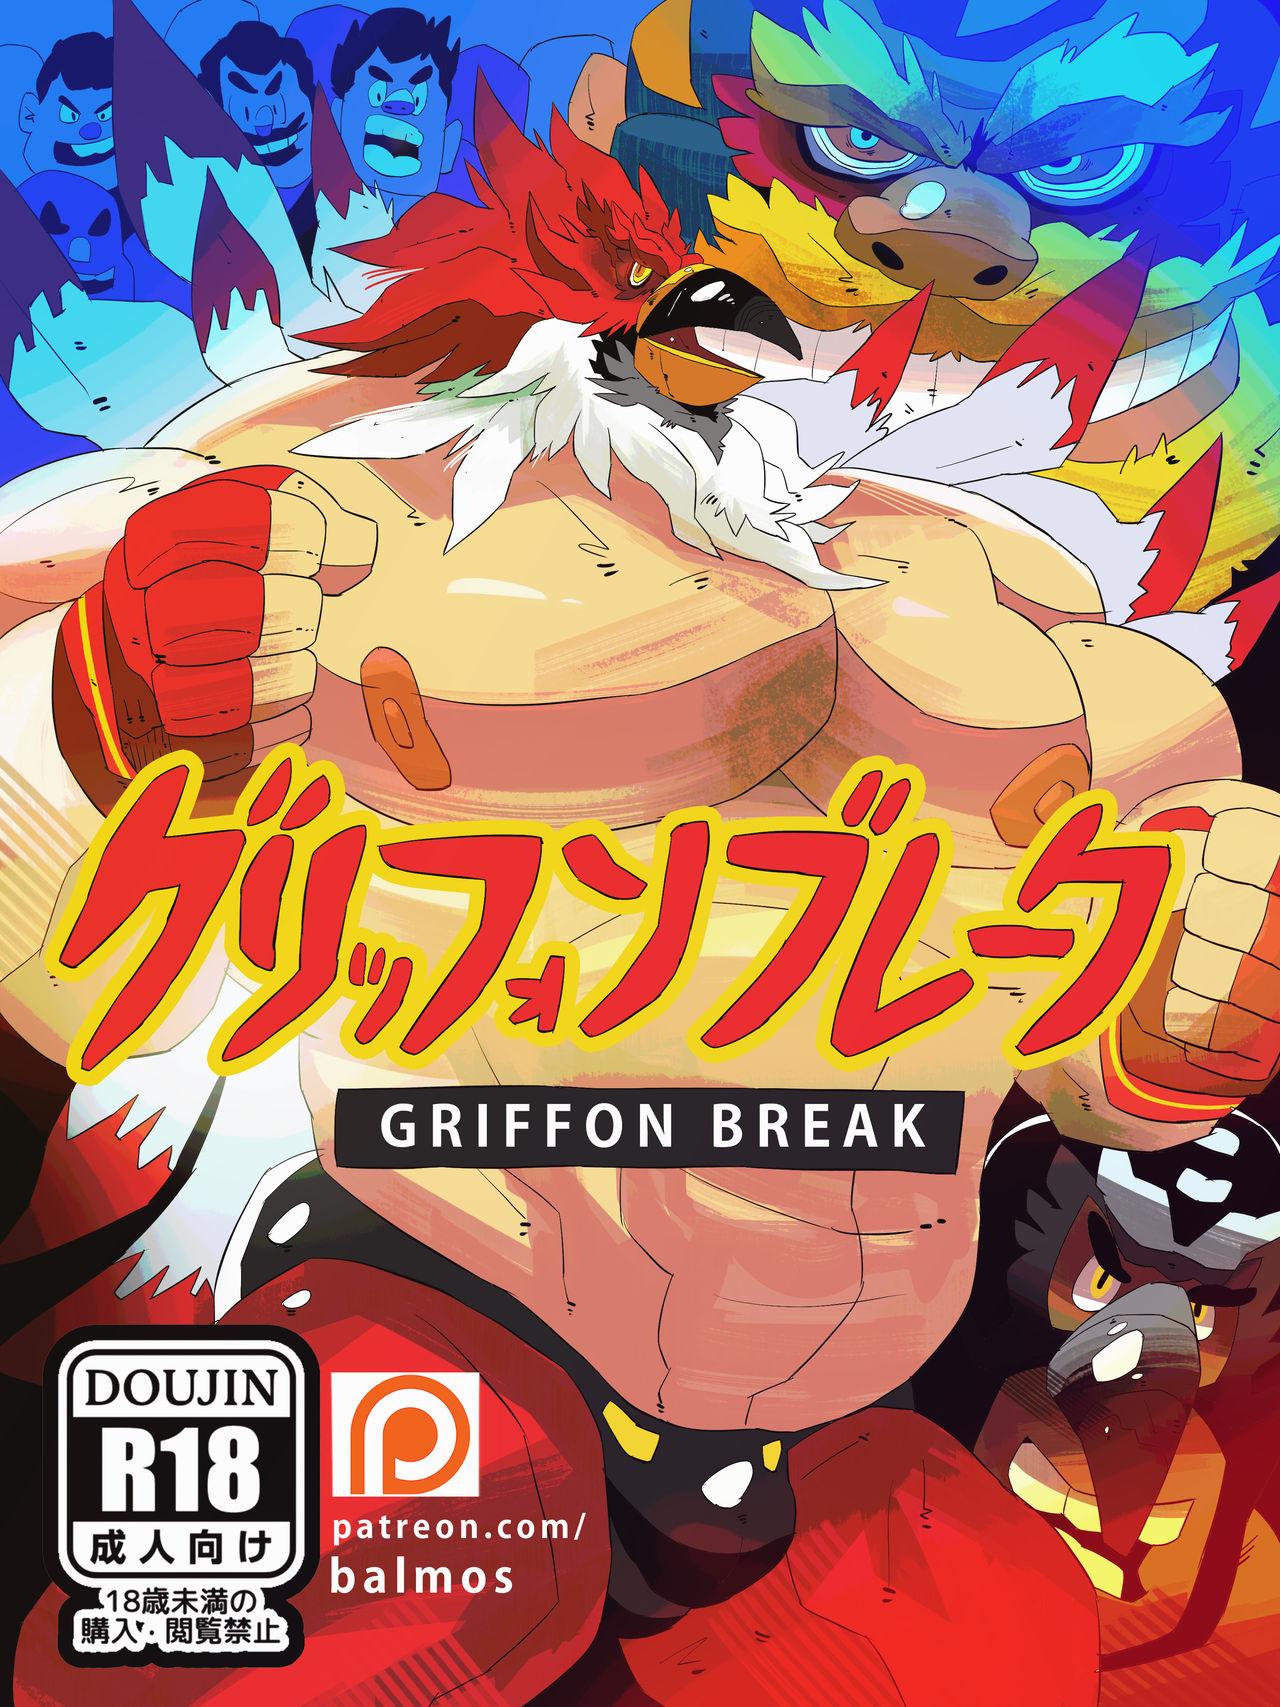 Gaydudes Griffon Break HD - King of fighters Fatal fury | garou densetsu Publico - Page 1